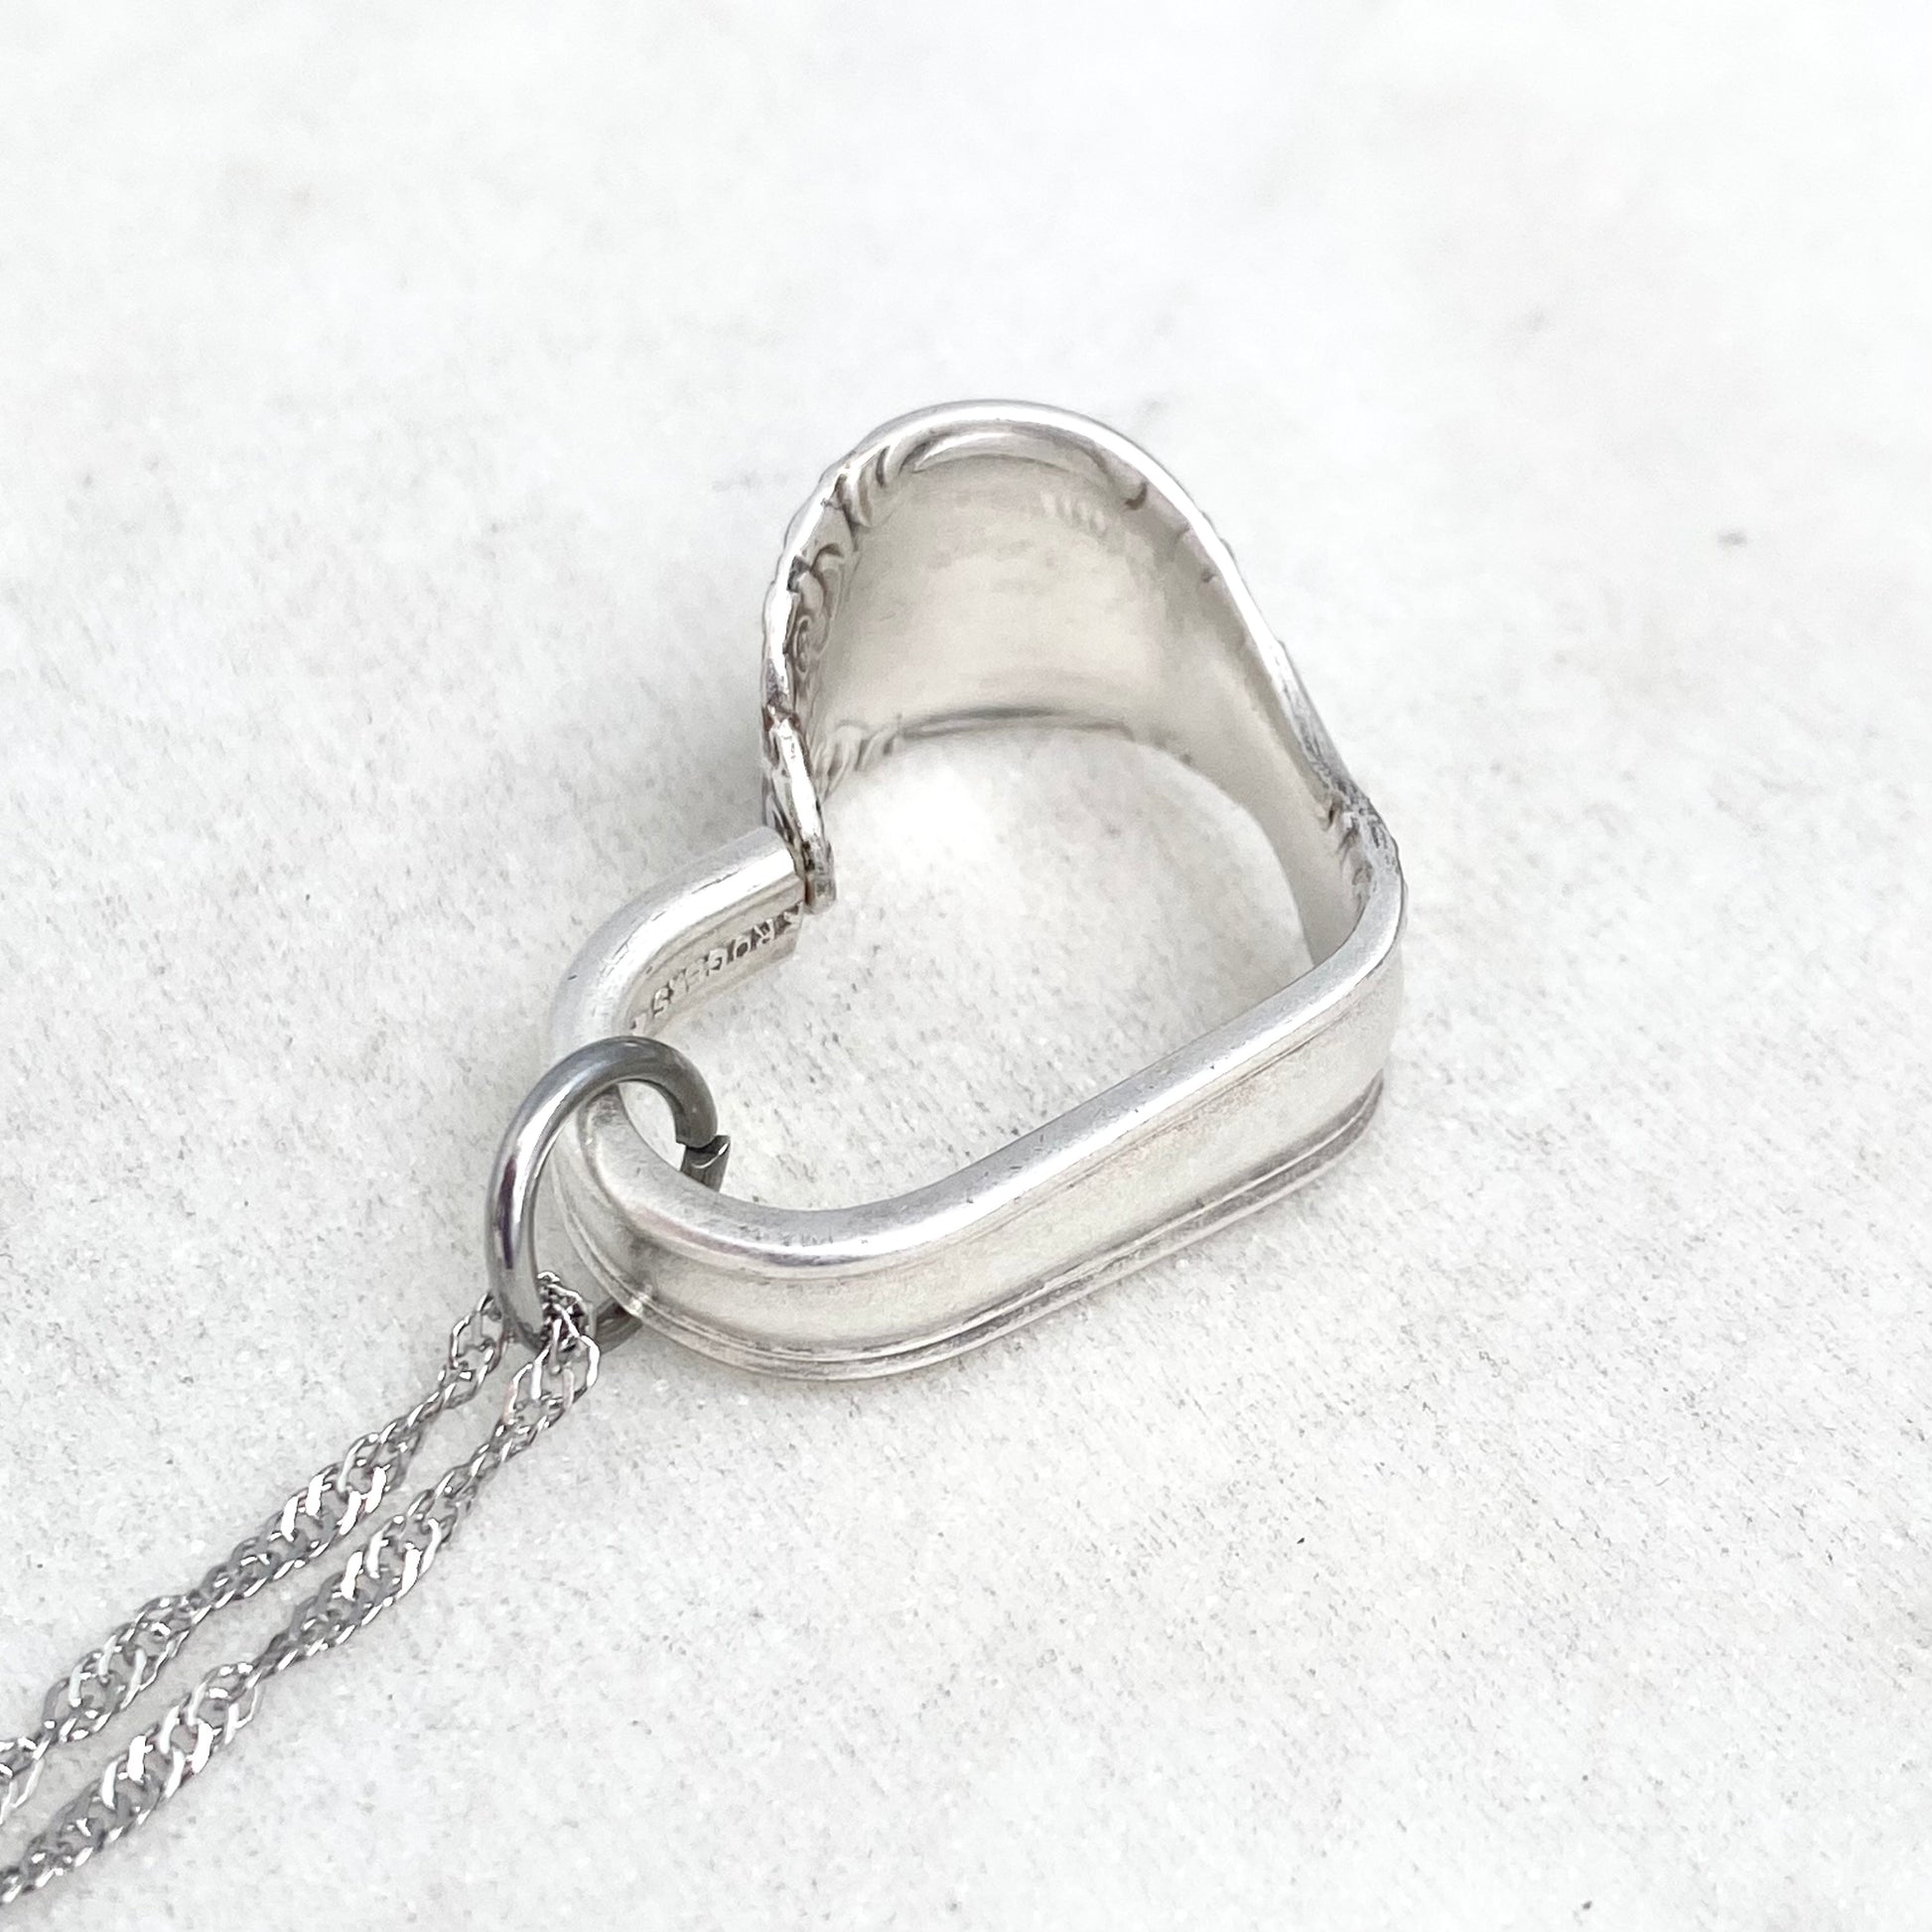 Silvery Mist 1955, Small Floating Heart, Vintage Spoon Jewelry Hearts callistafaye   